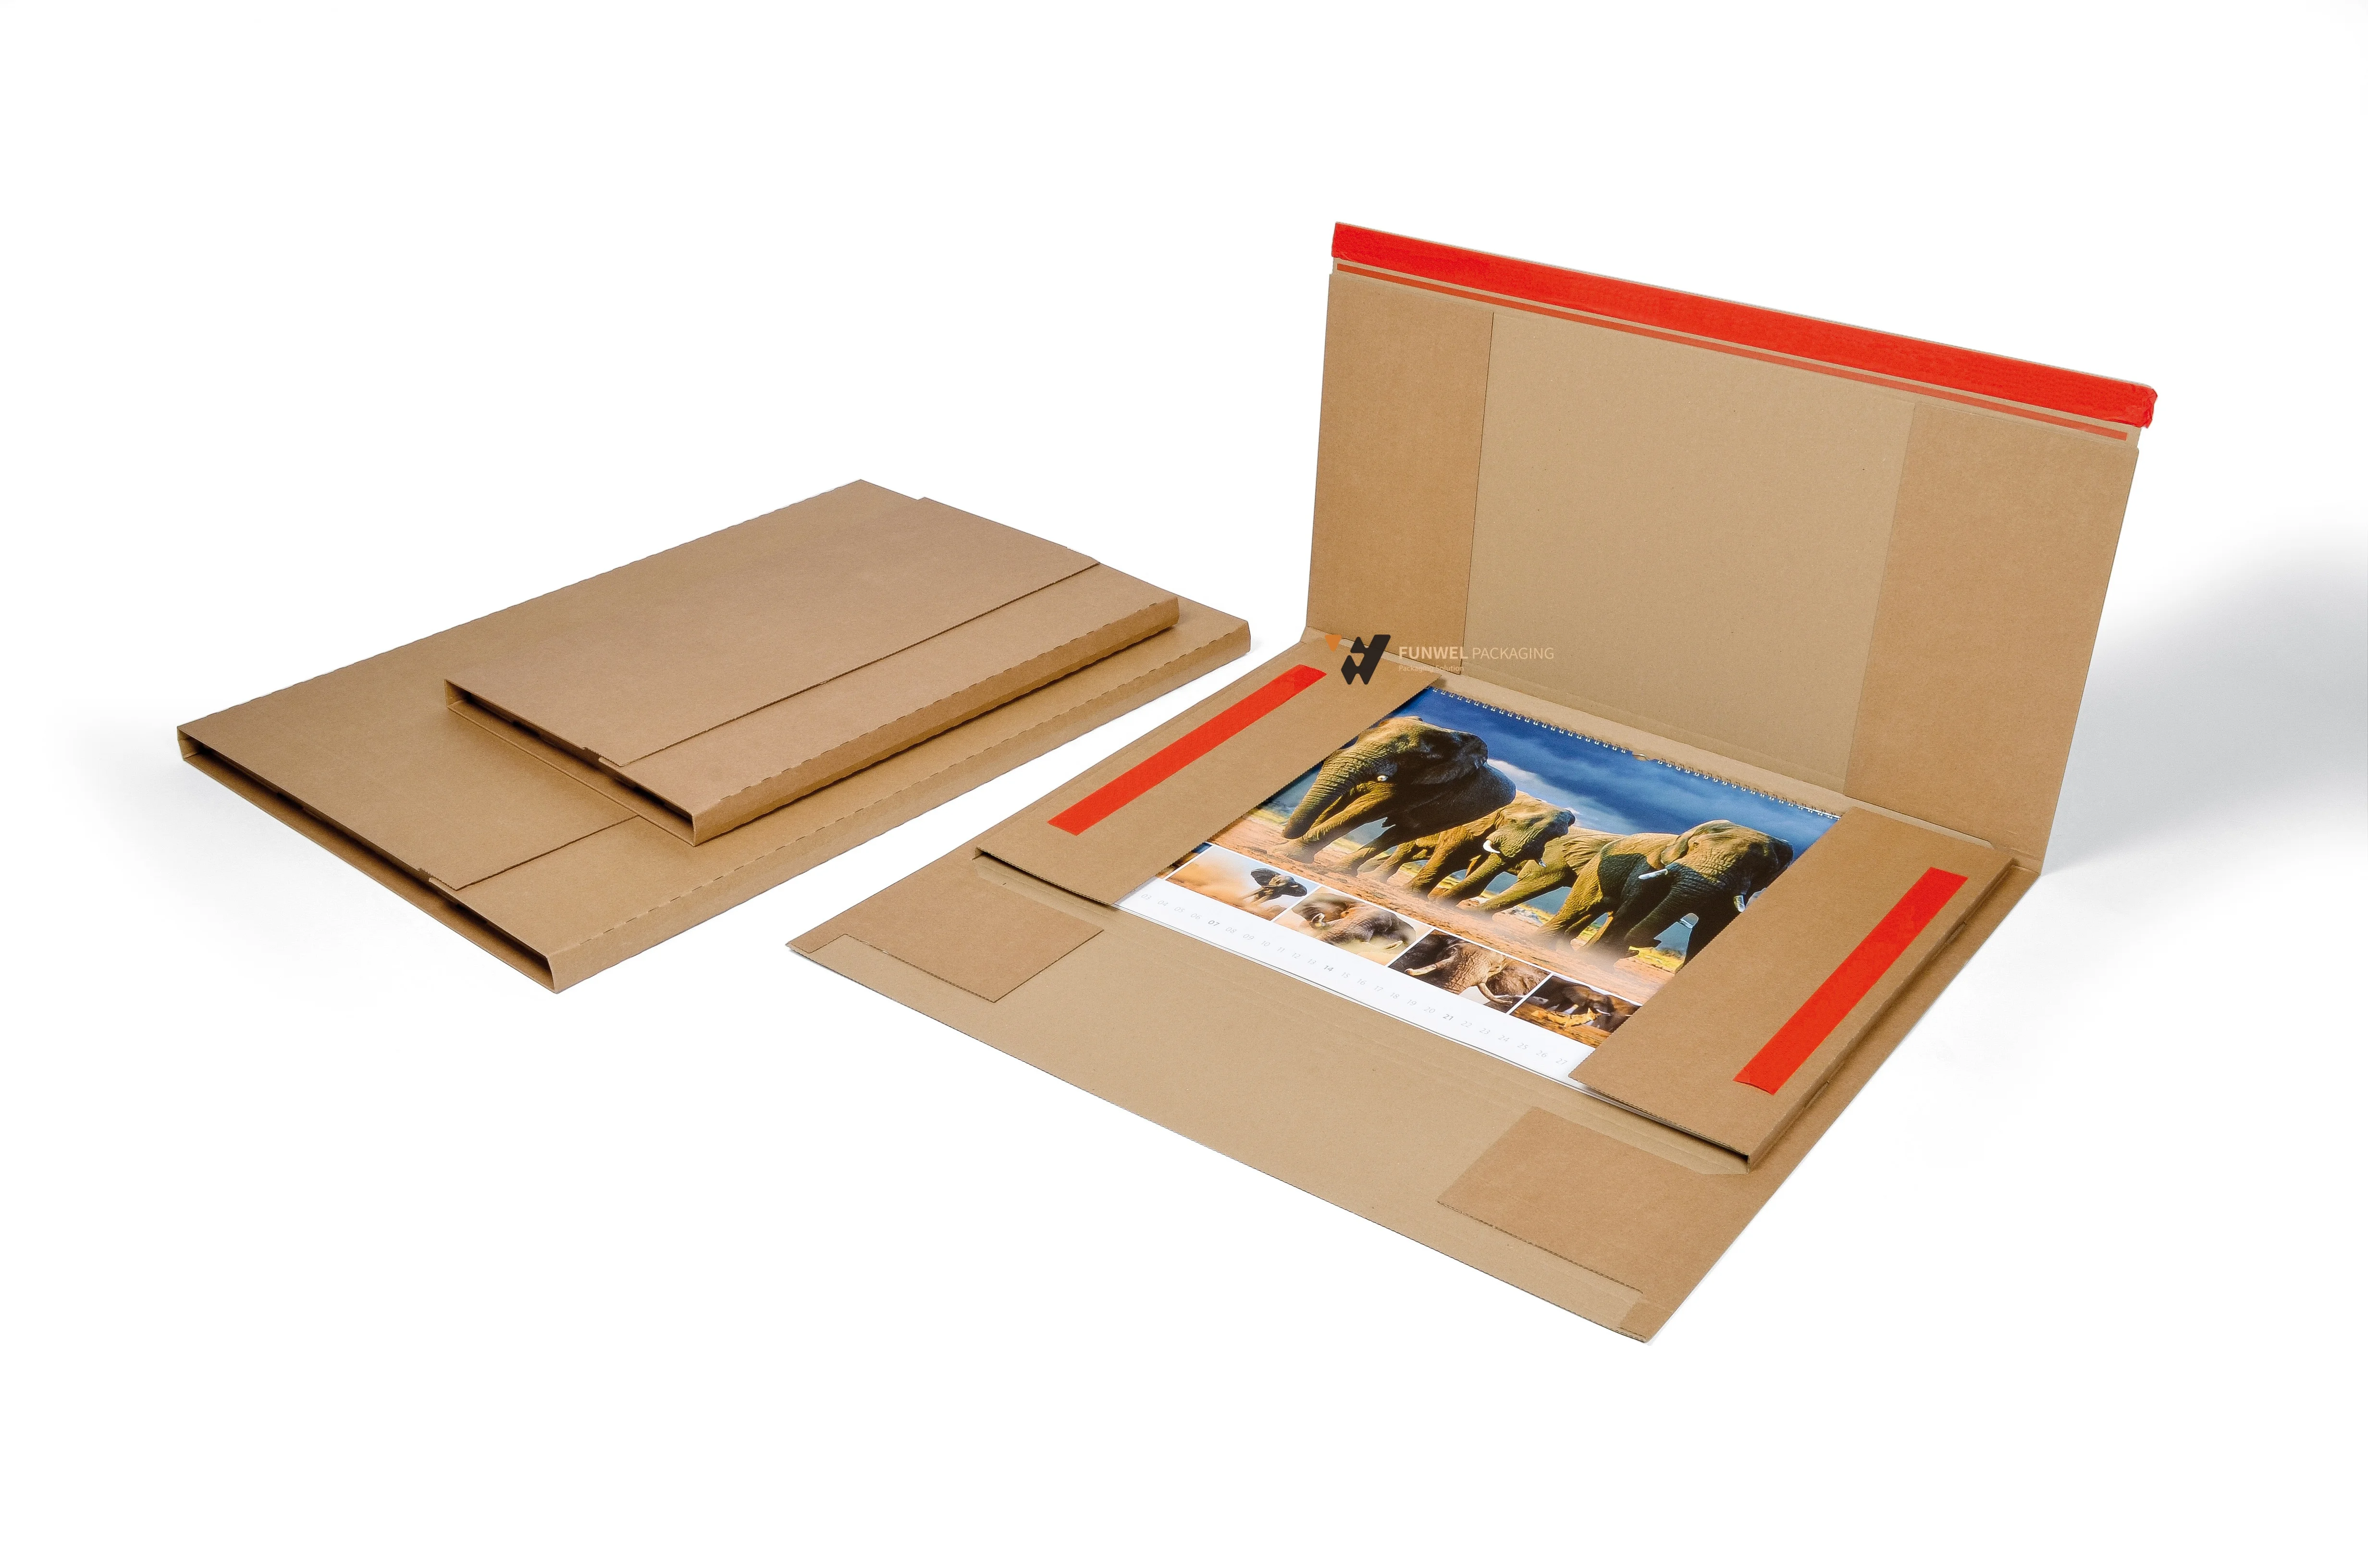 Формат package. Упаковка книг для отправки. X-Fold упаковка. Безопасная упаковка для книги для отправки.